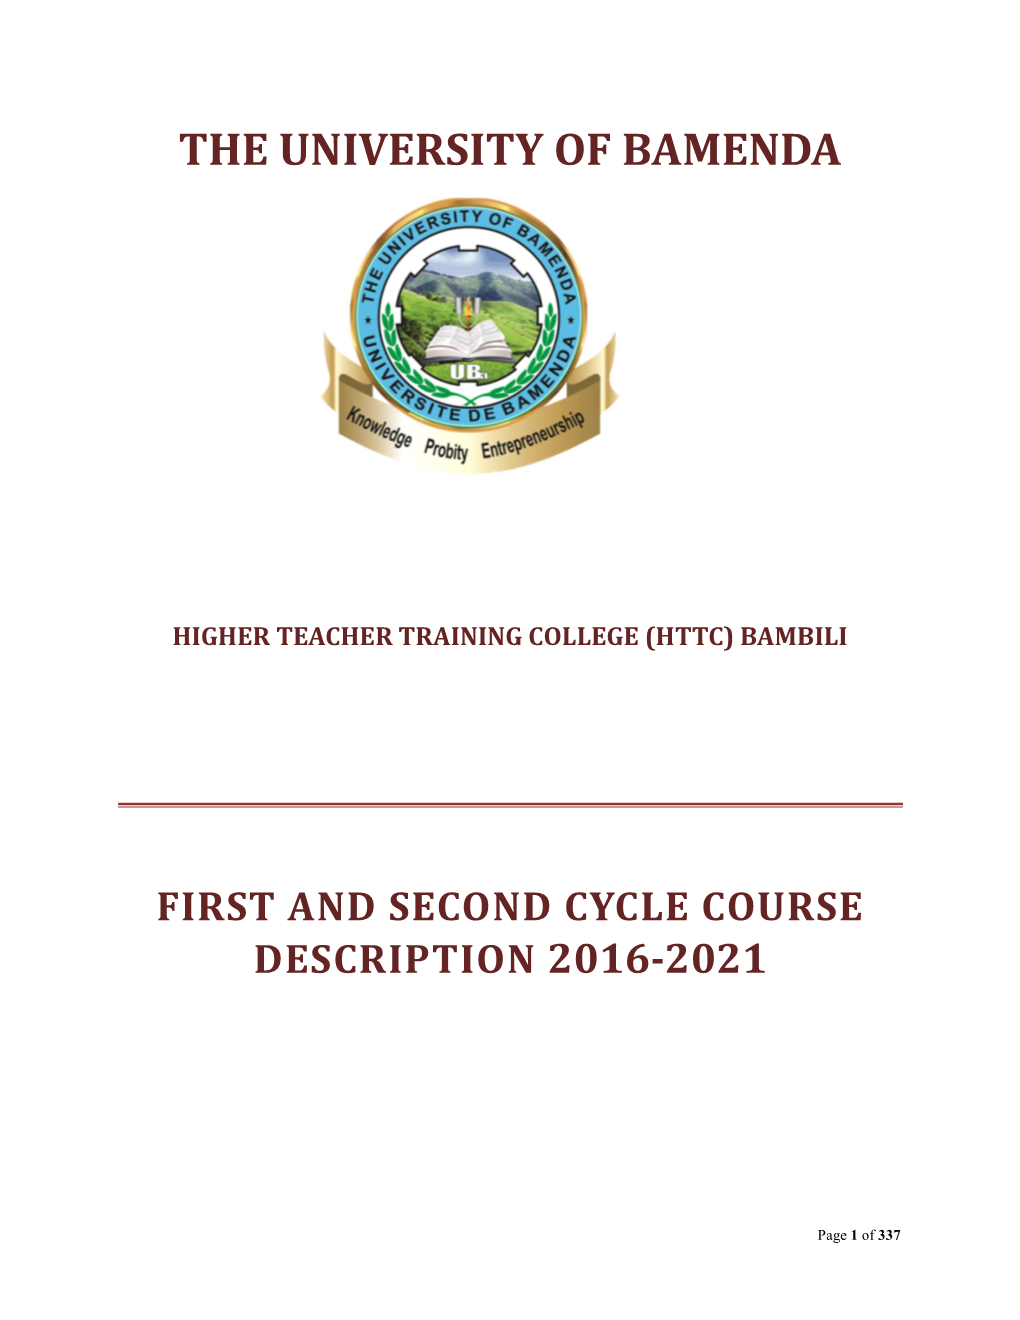 The University of Bamenda